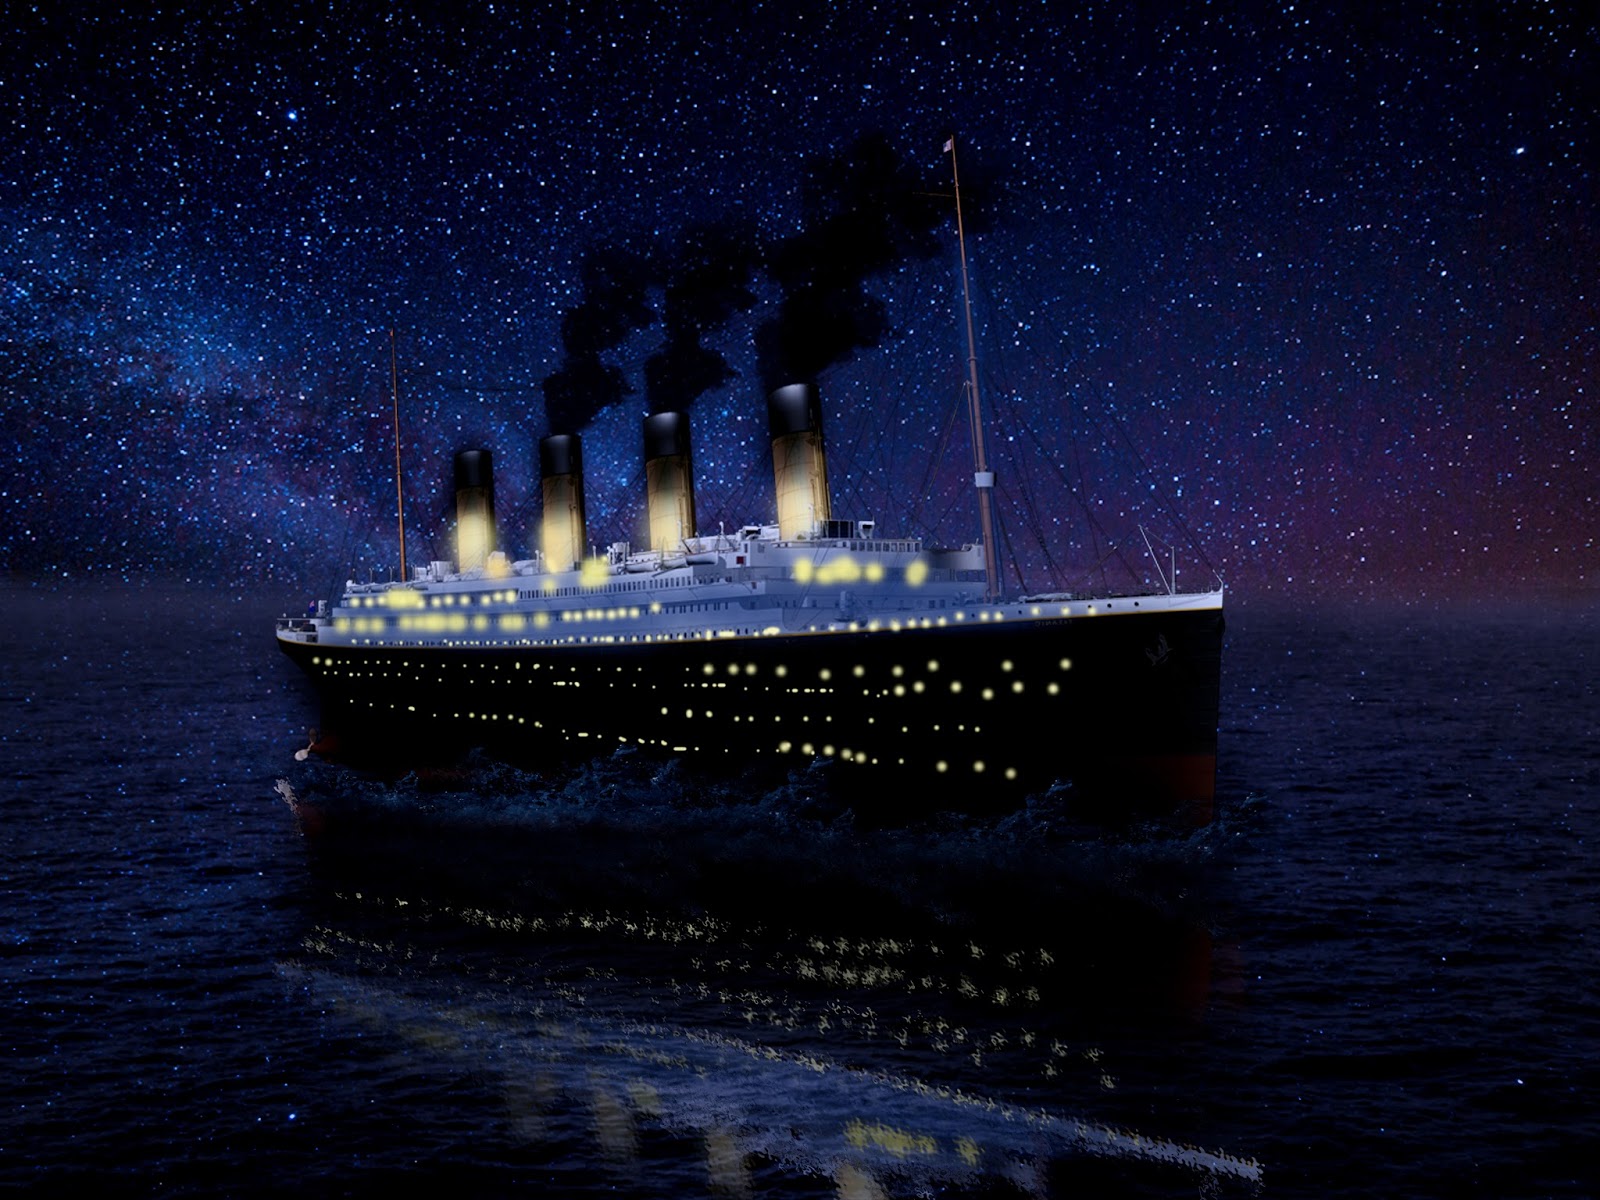 Titanic Painting Ideas